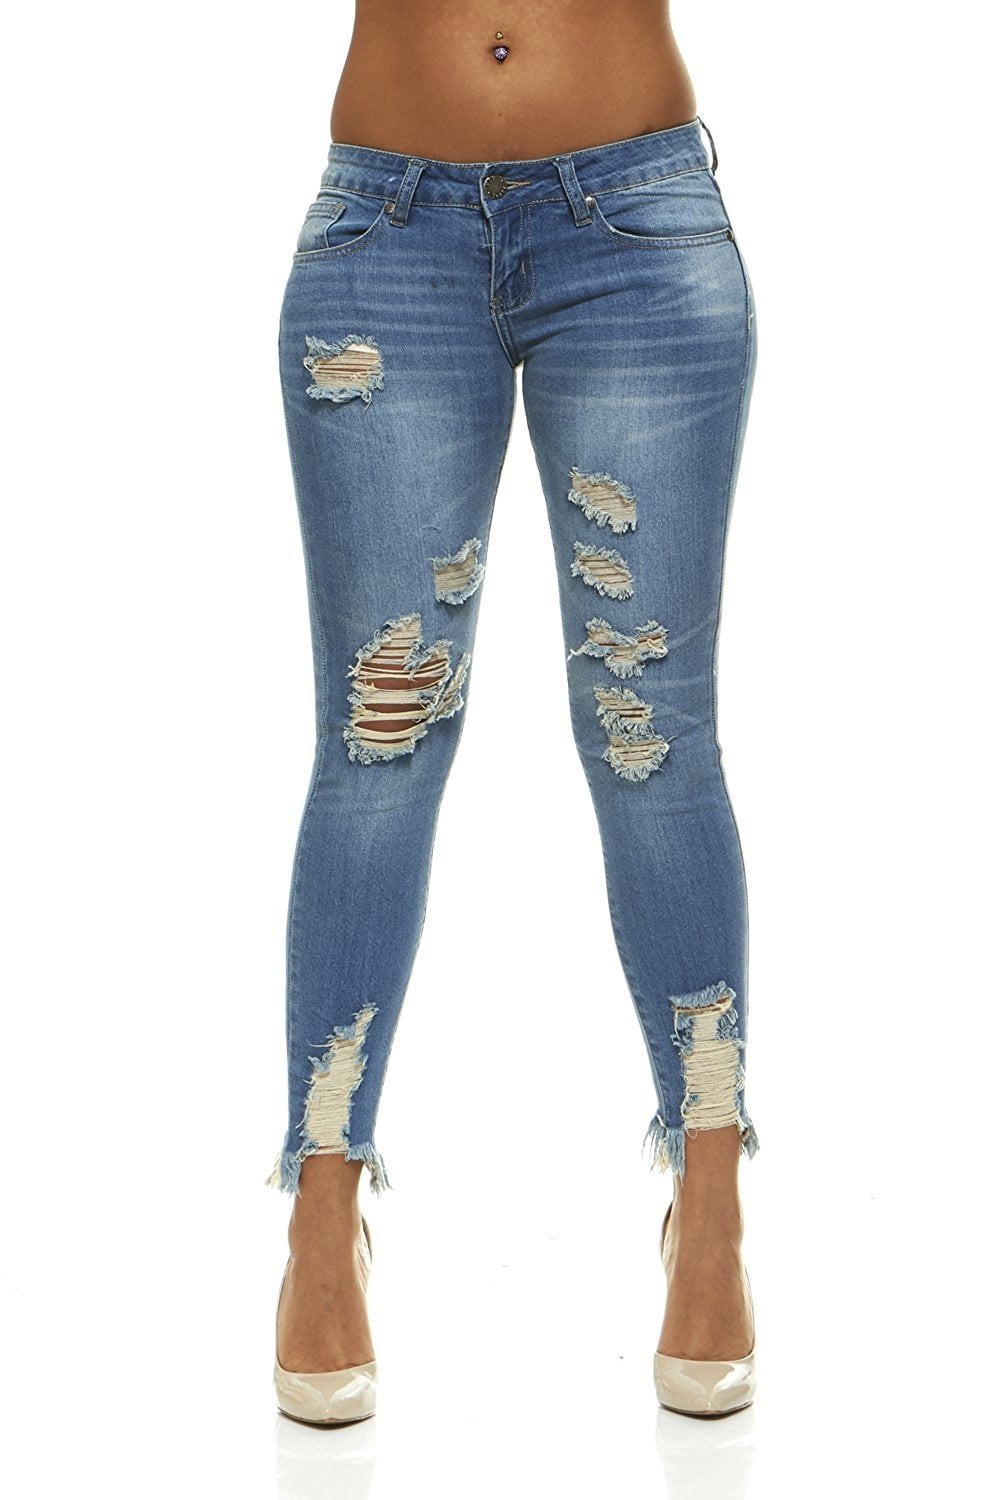 ripped jeans for women walmart